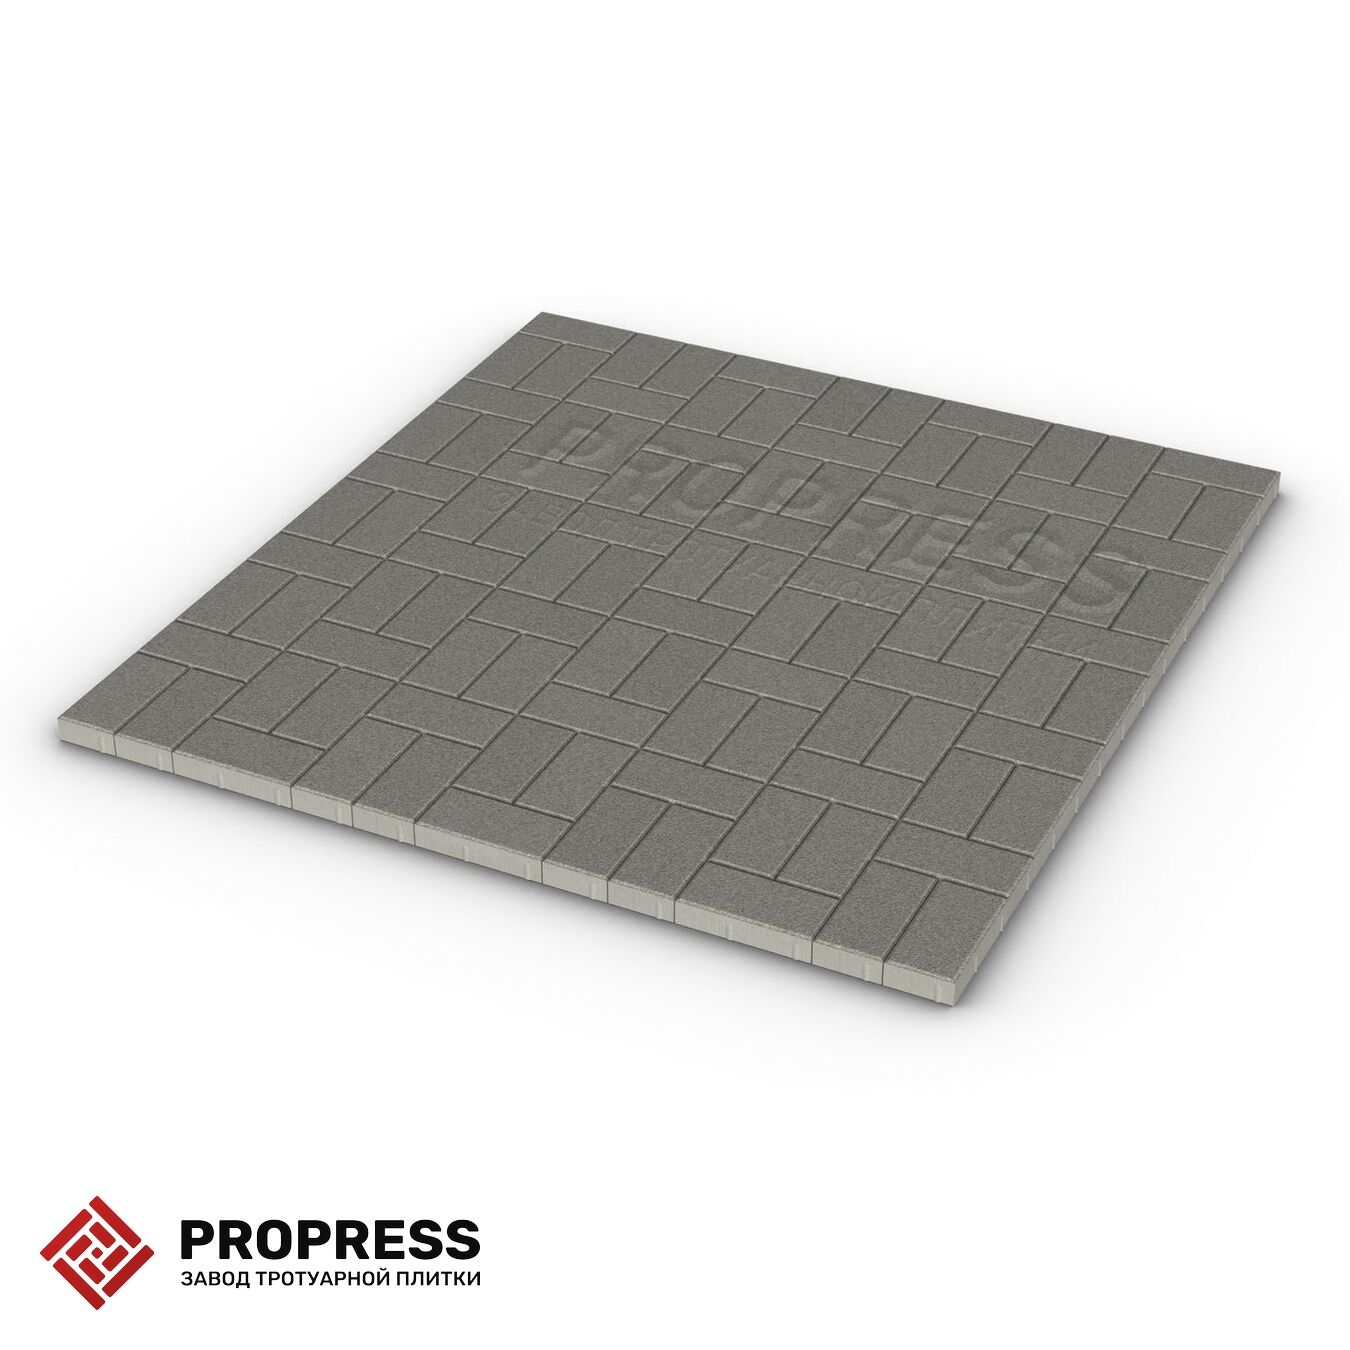 Тротуарная плитка Пропресс Кирпичик Серый мрамор 40 мм